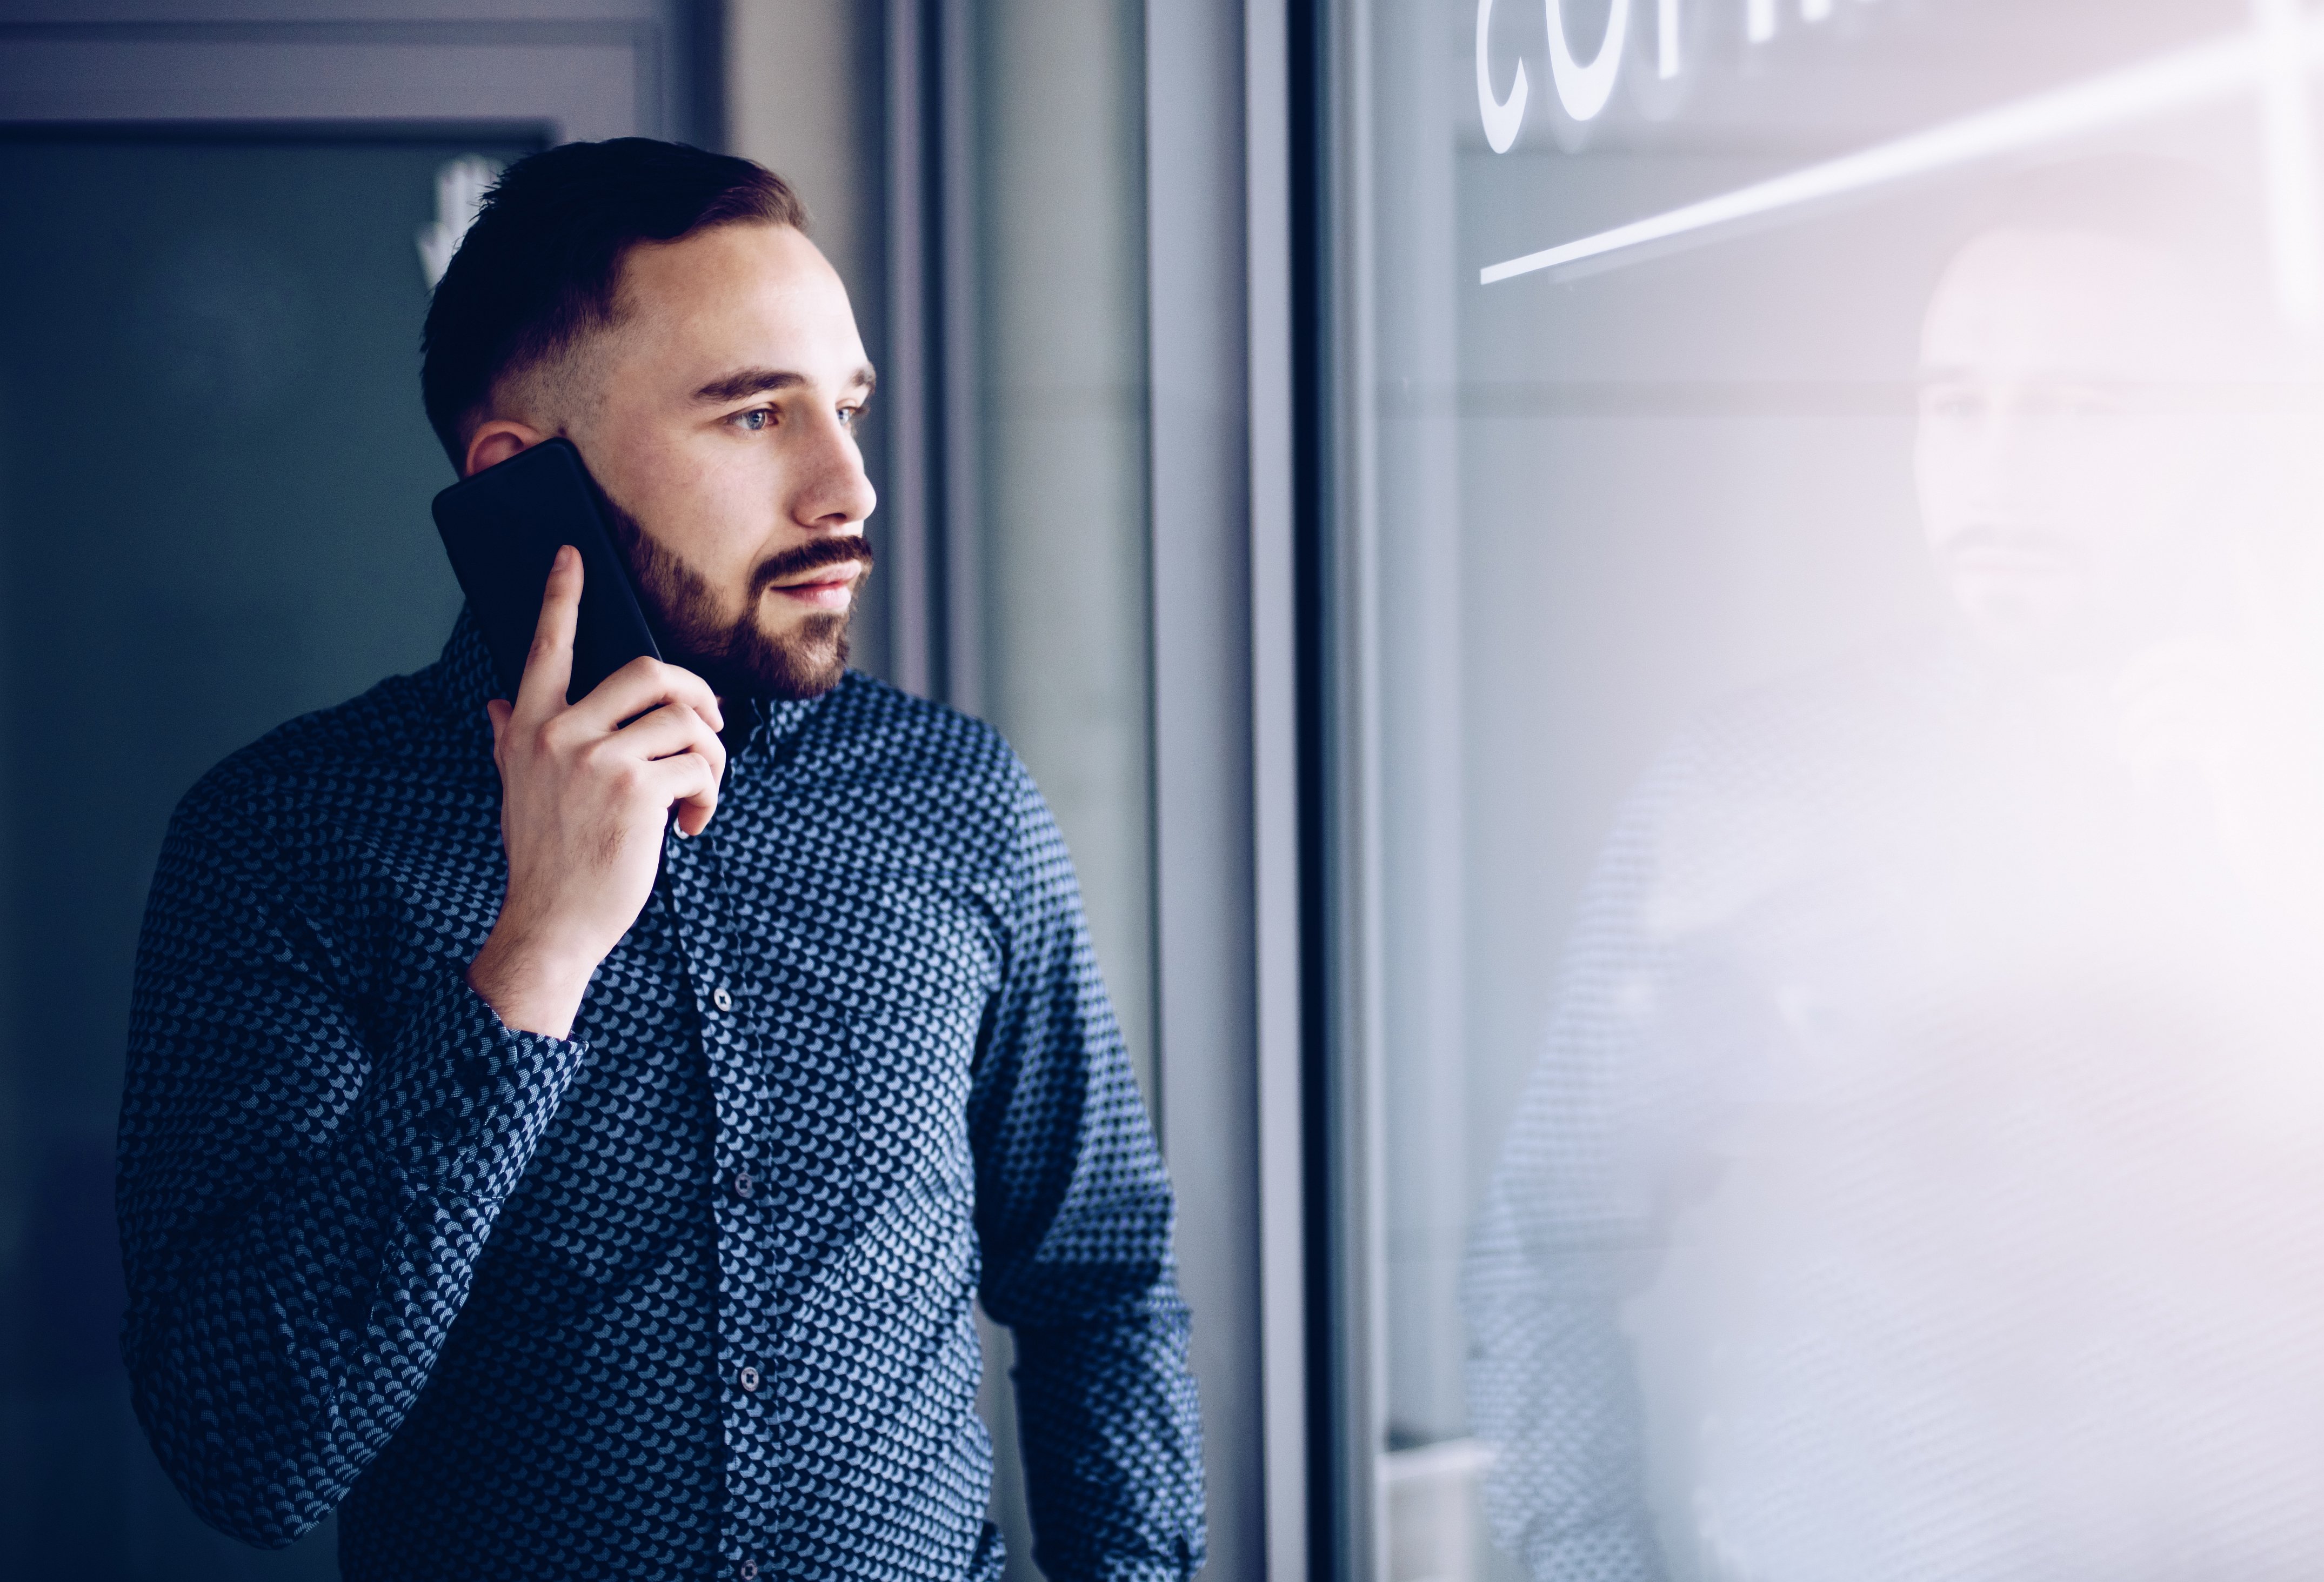 Man talking on a phone. Photo: Shutterstock